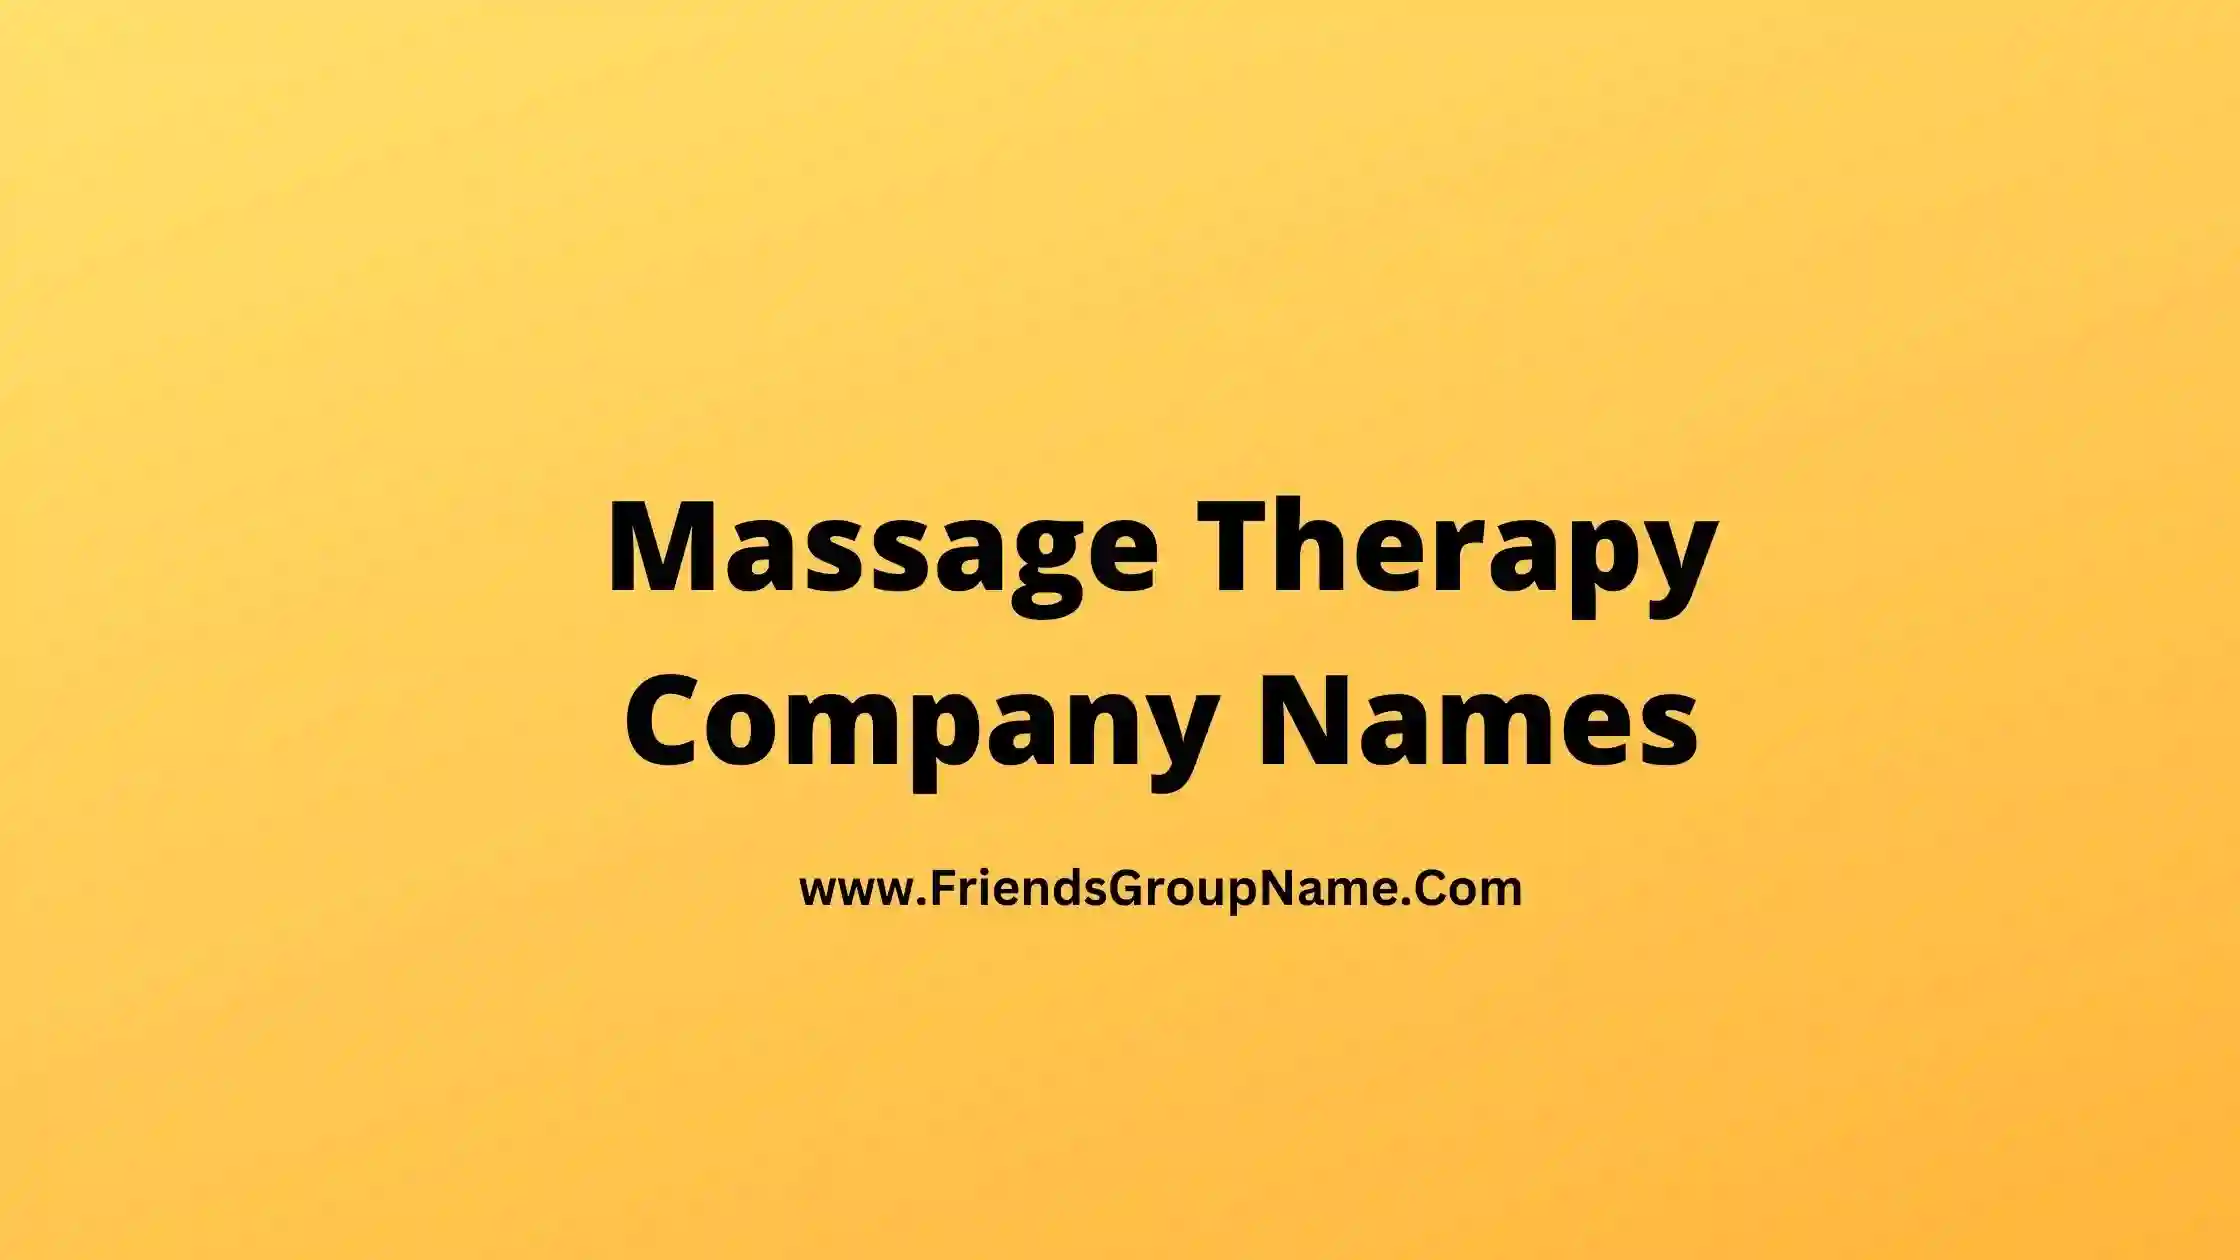 Massage Therapy Company Names